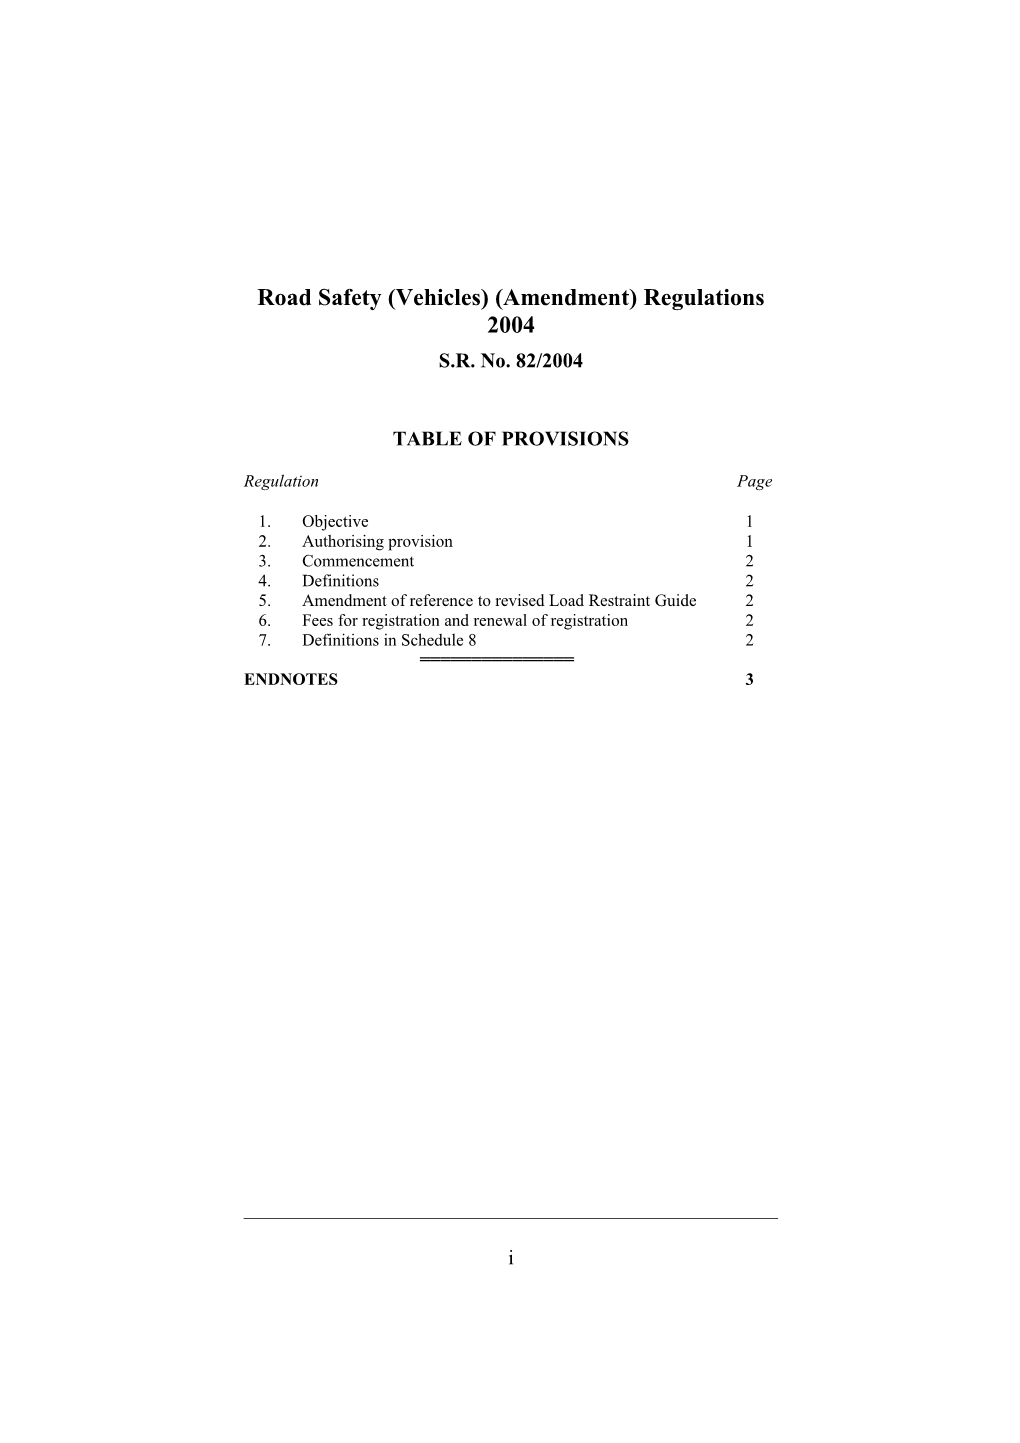 Road Safety (Vehicles) (Amendment) Regulations 2004